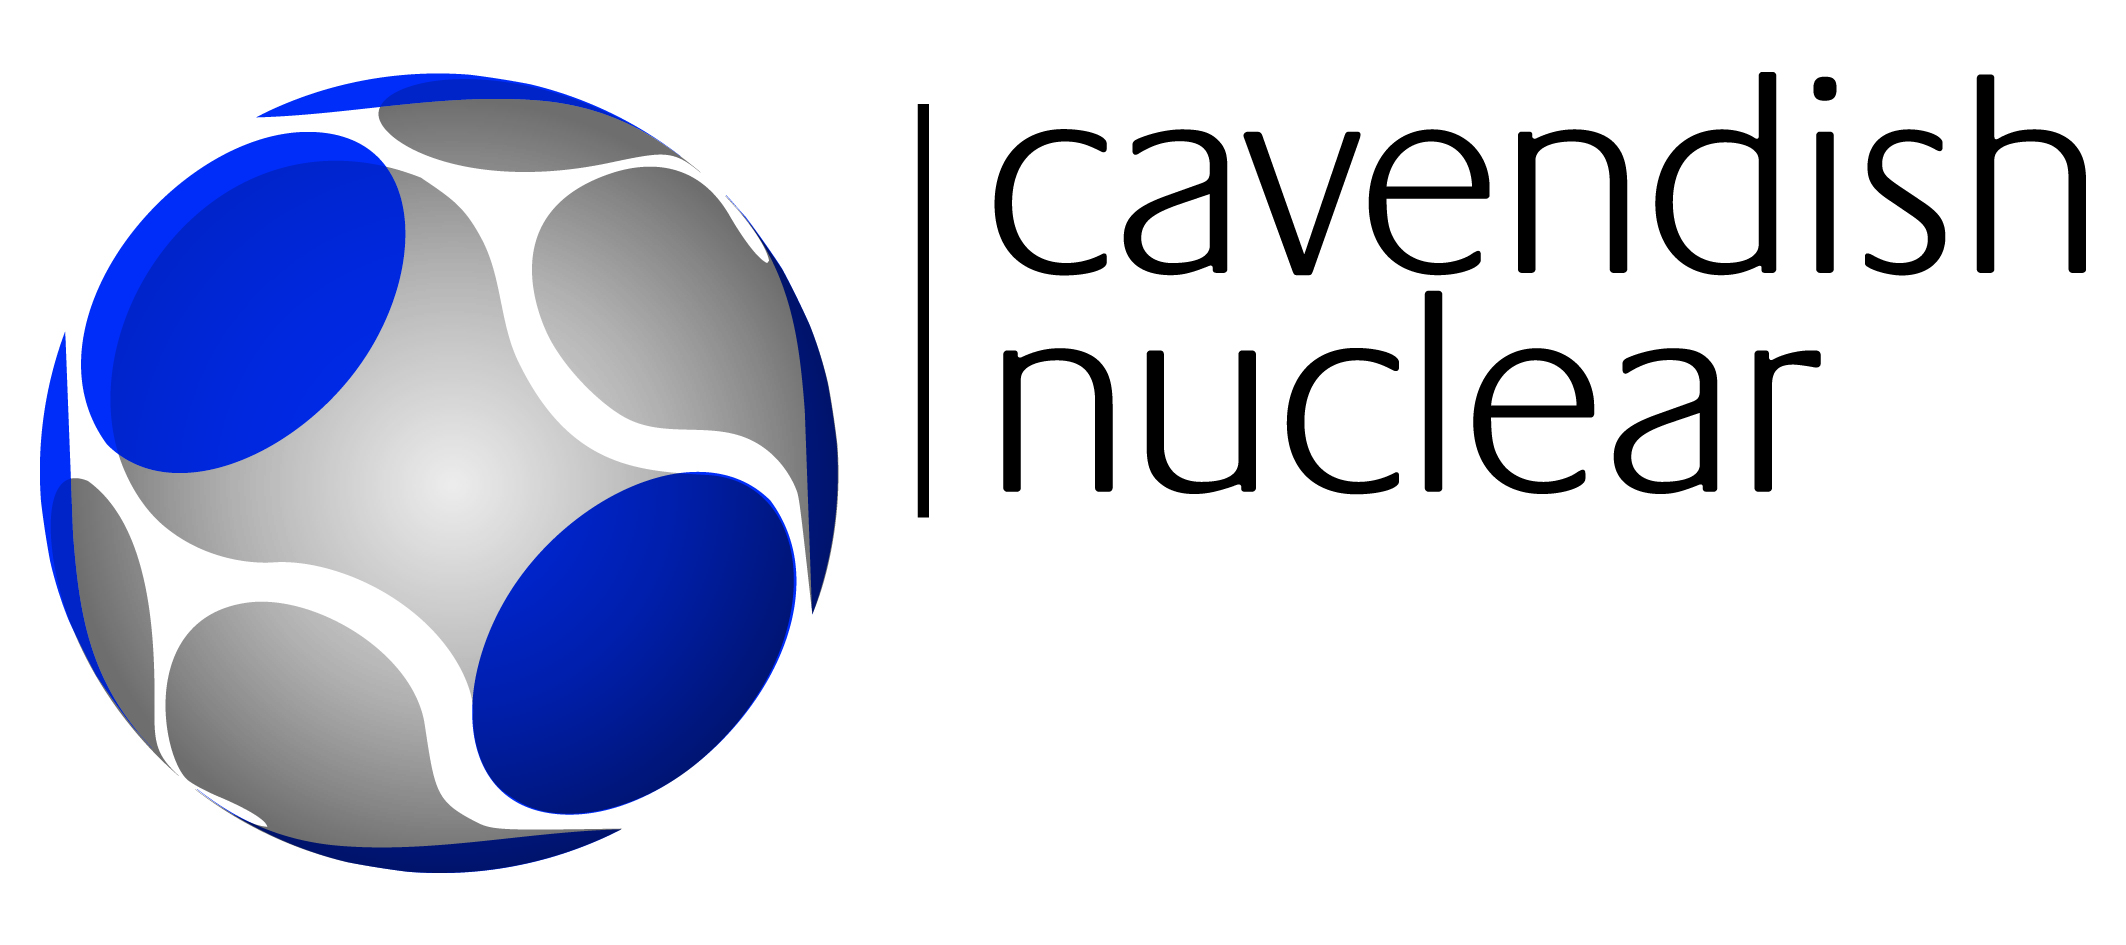 CavendishNuclear_4col_PRINT